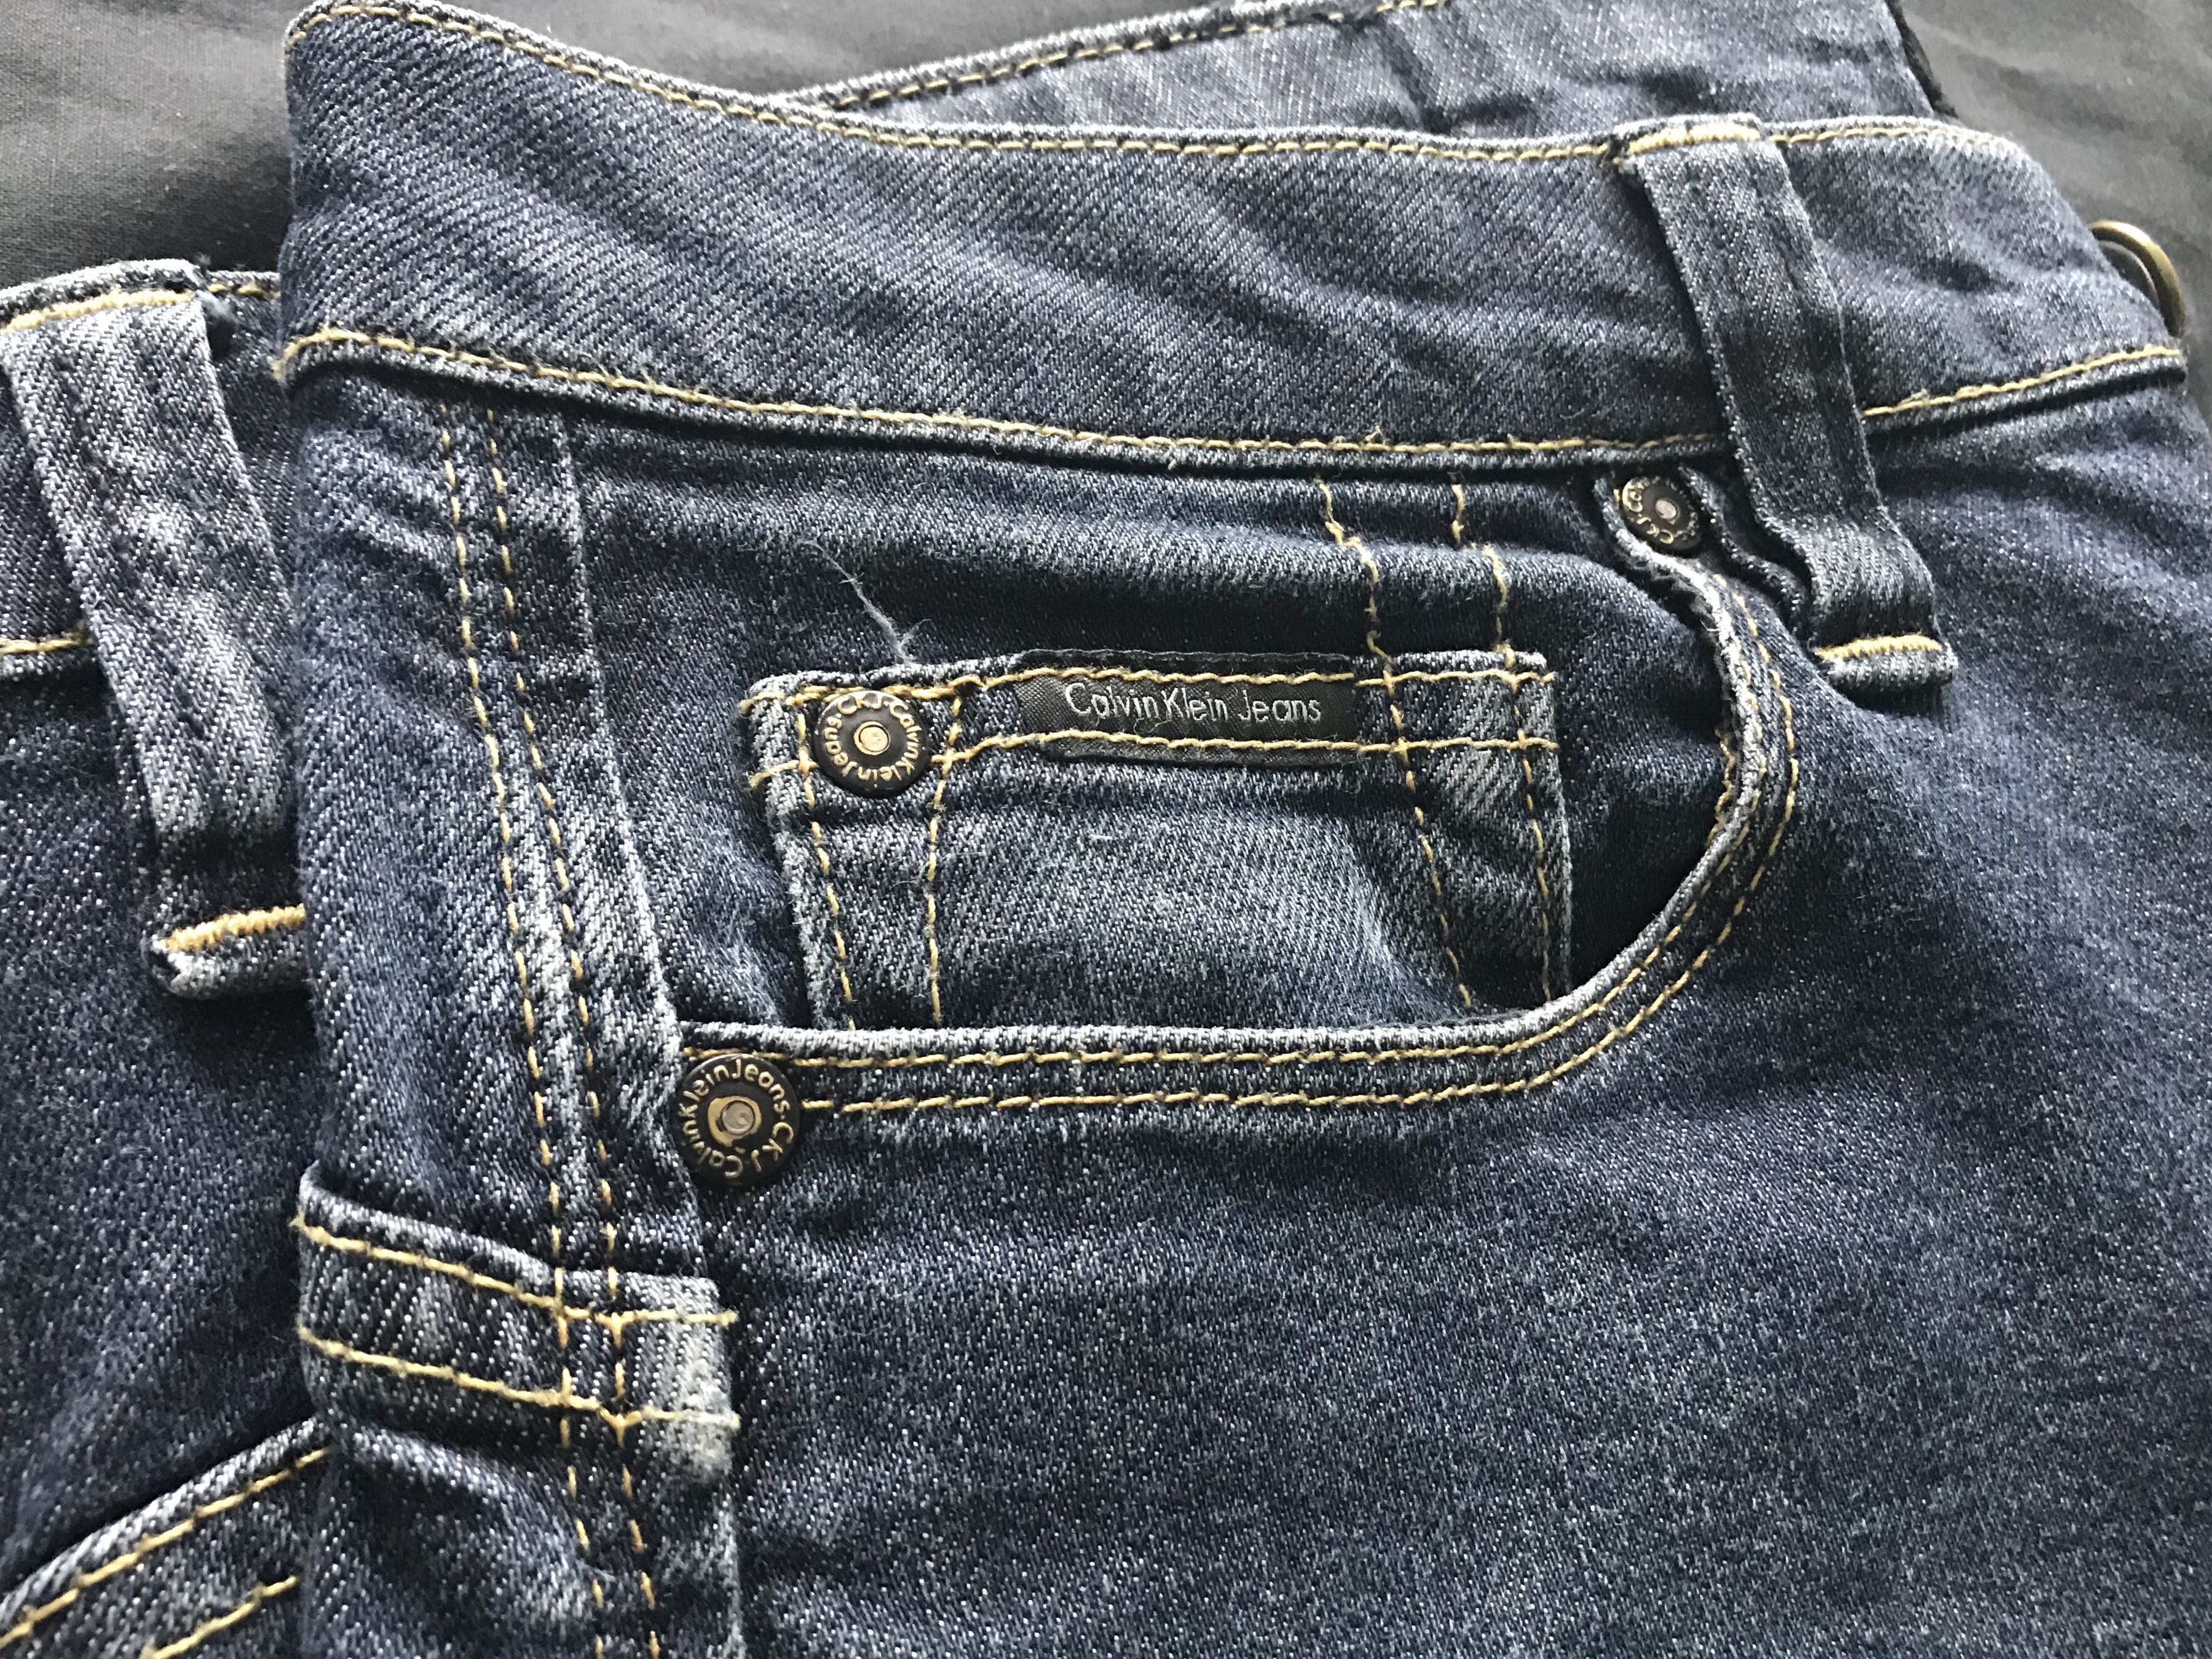 calvin klein original jeans